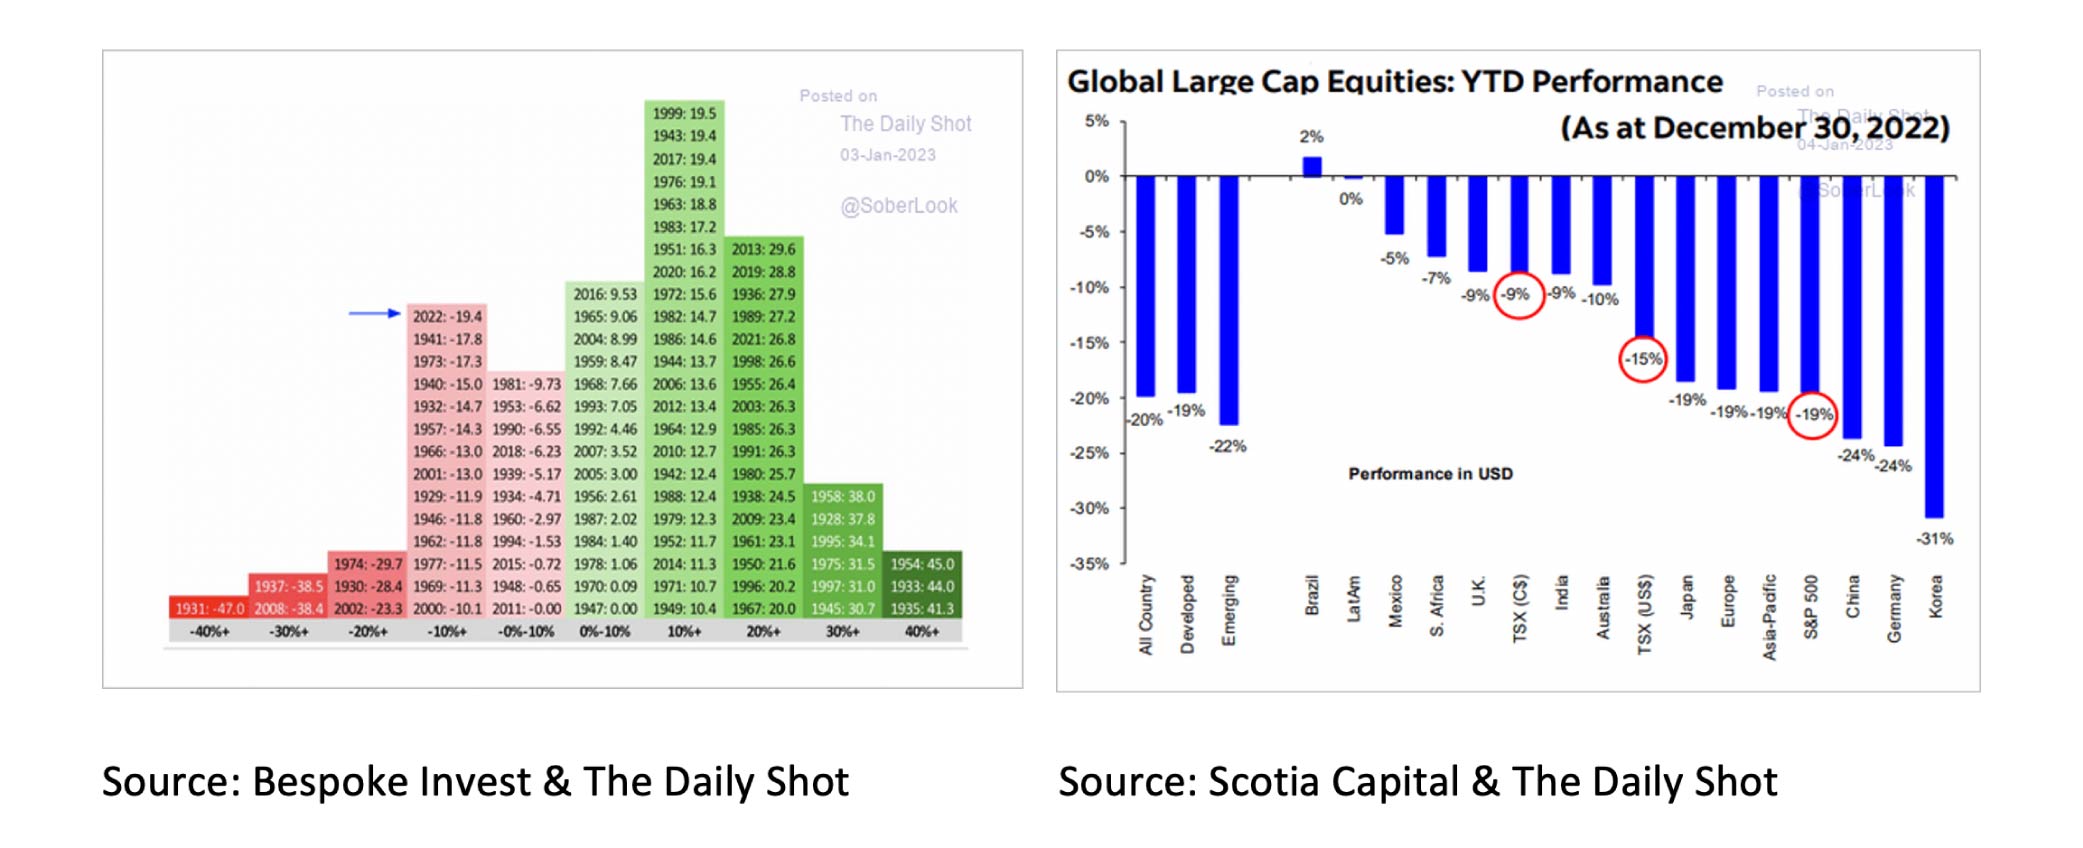 Global Large Cap Equities YTD Performance